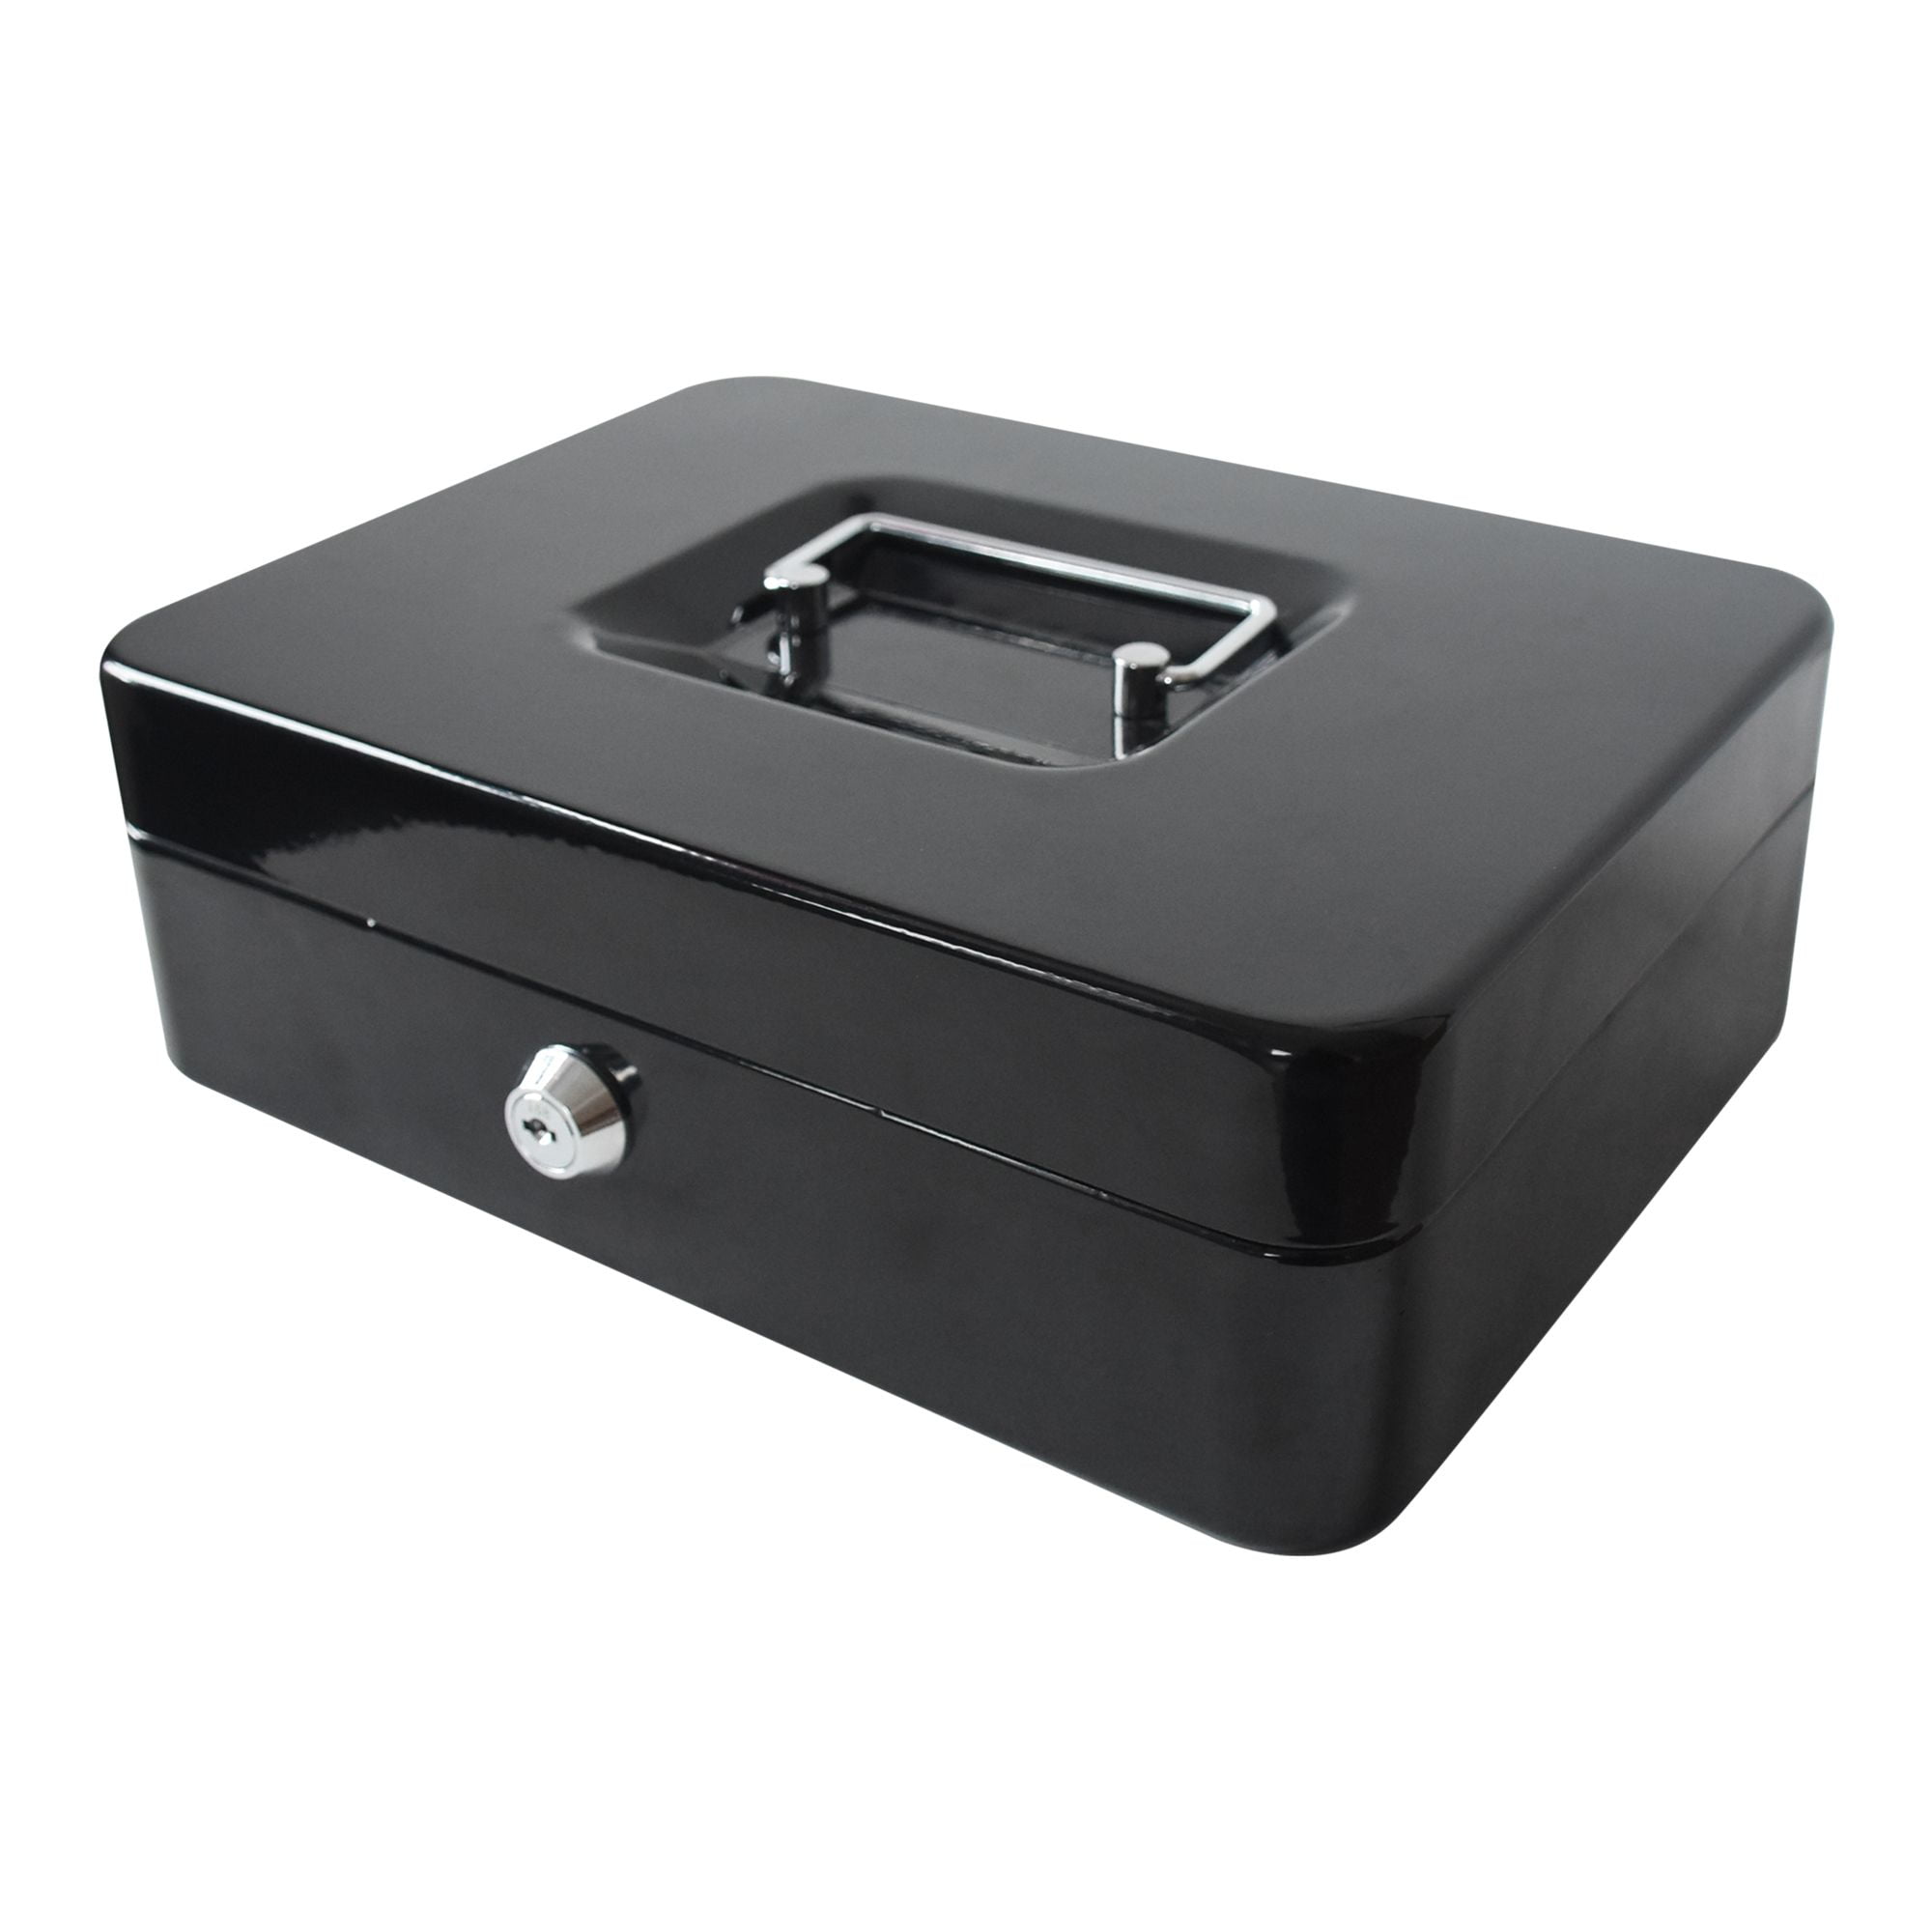 Pen + Gear 10 Inch Metal Cash Box with Cash Tray and Key Lock, Black, YFC-25